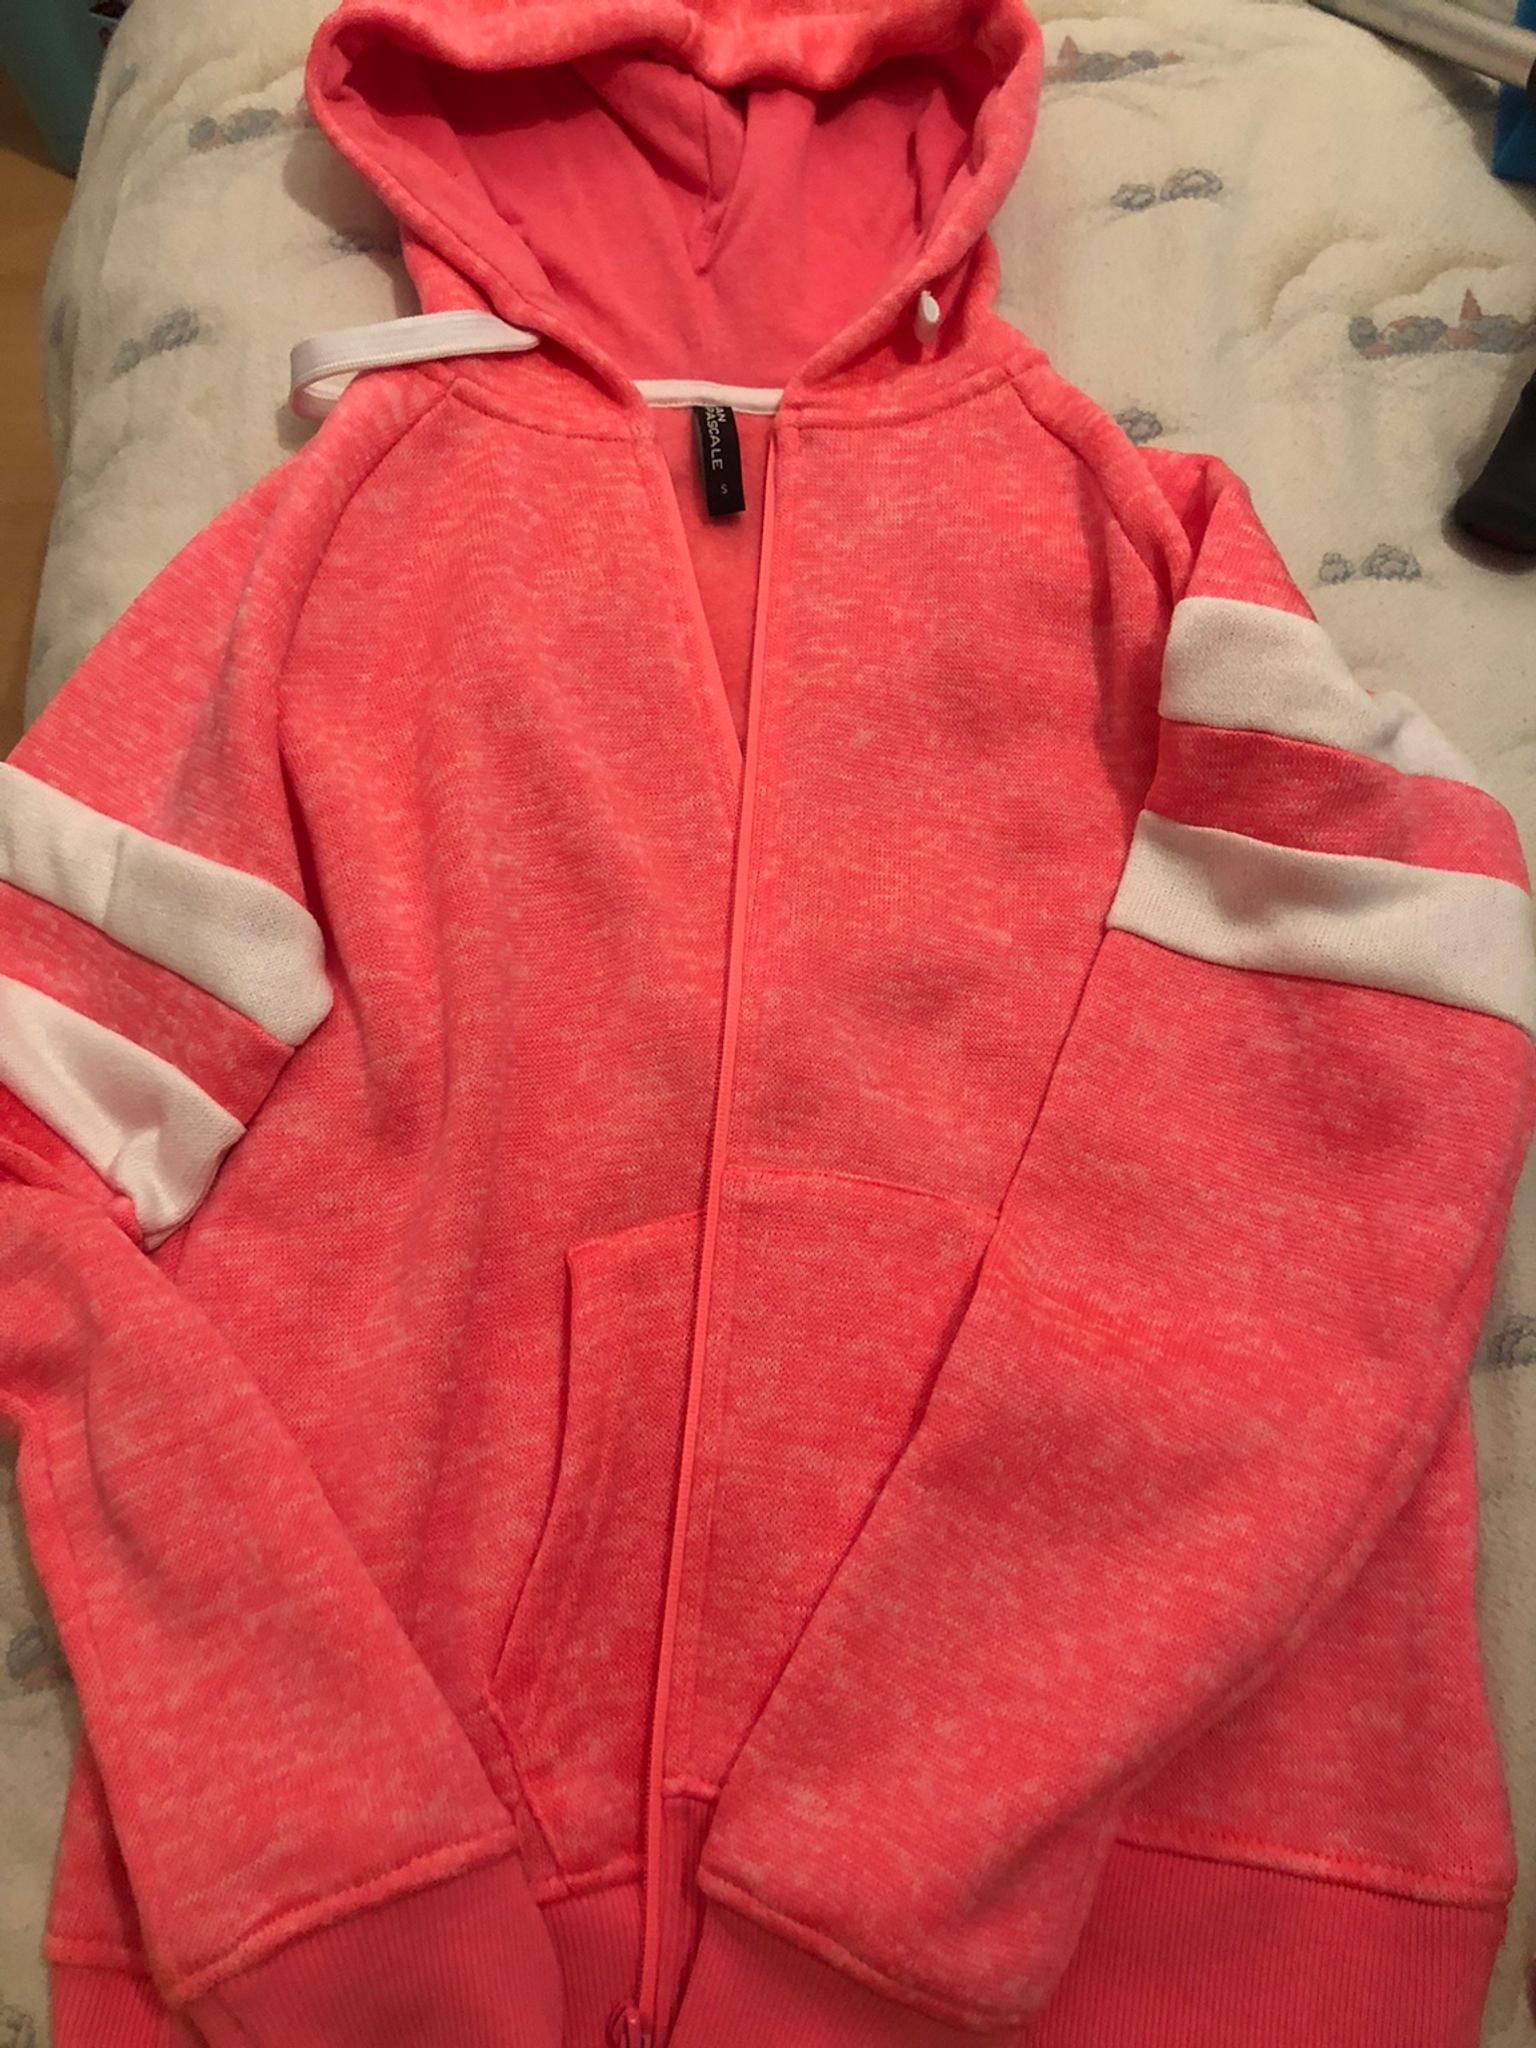 pinker champion hoodie